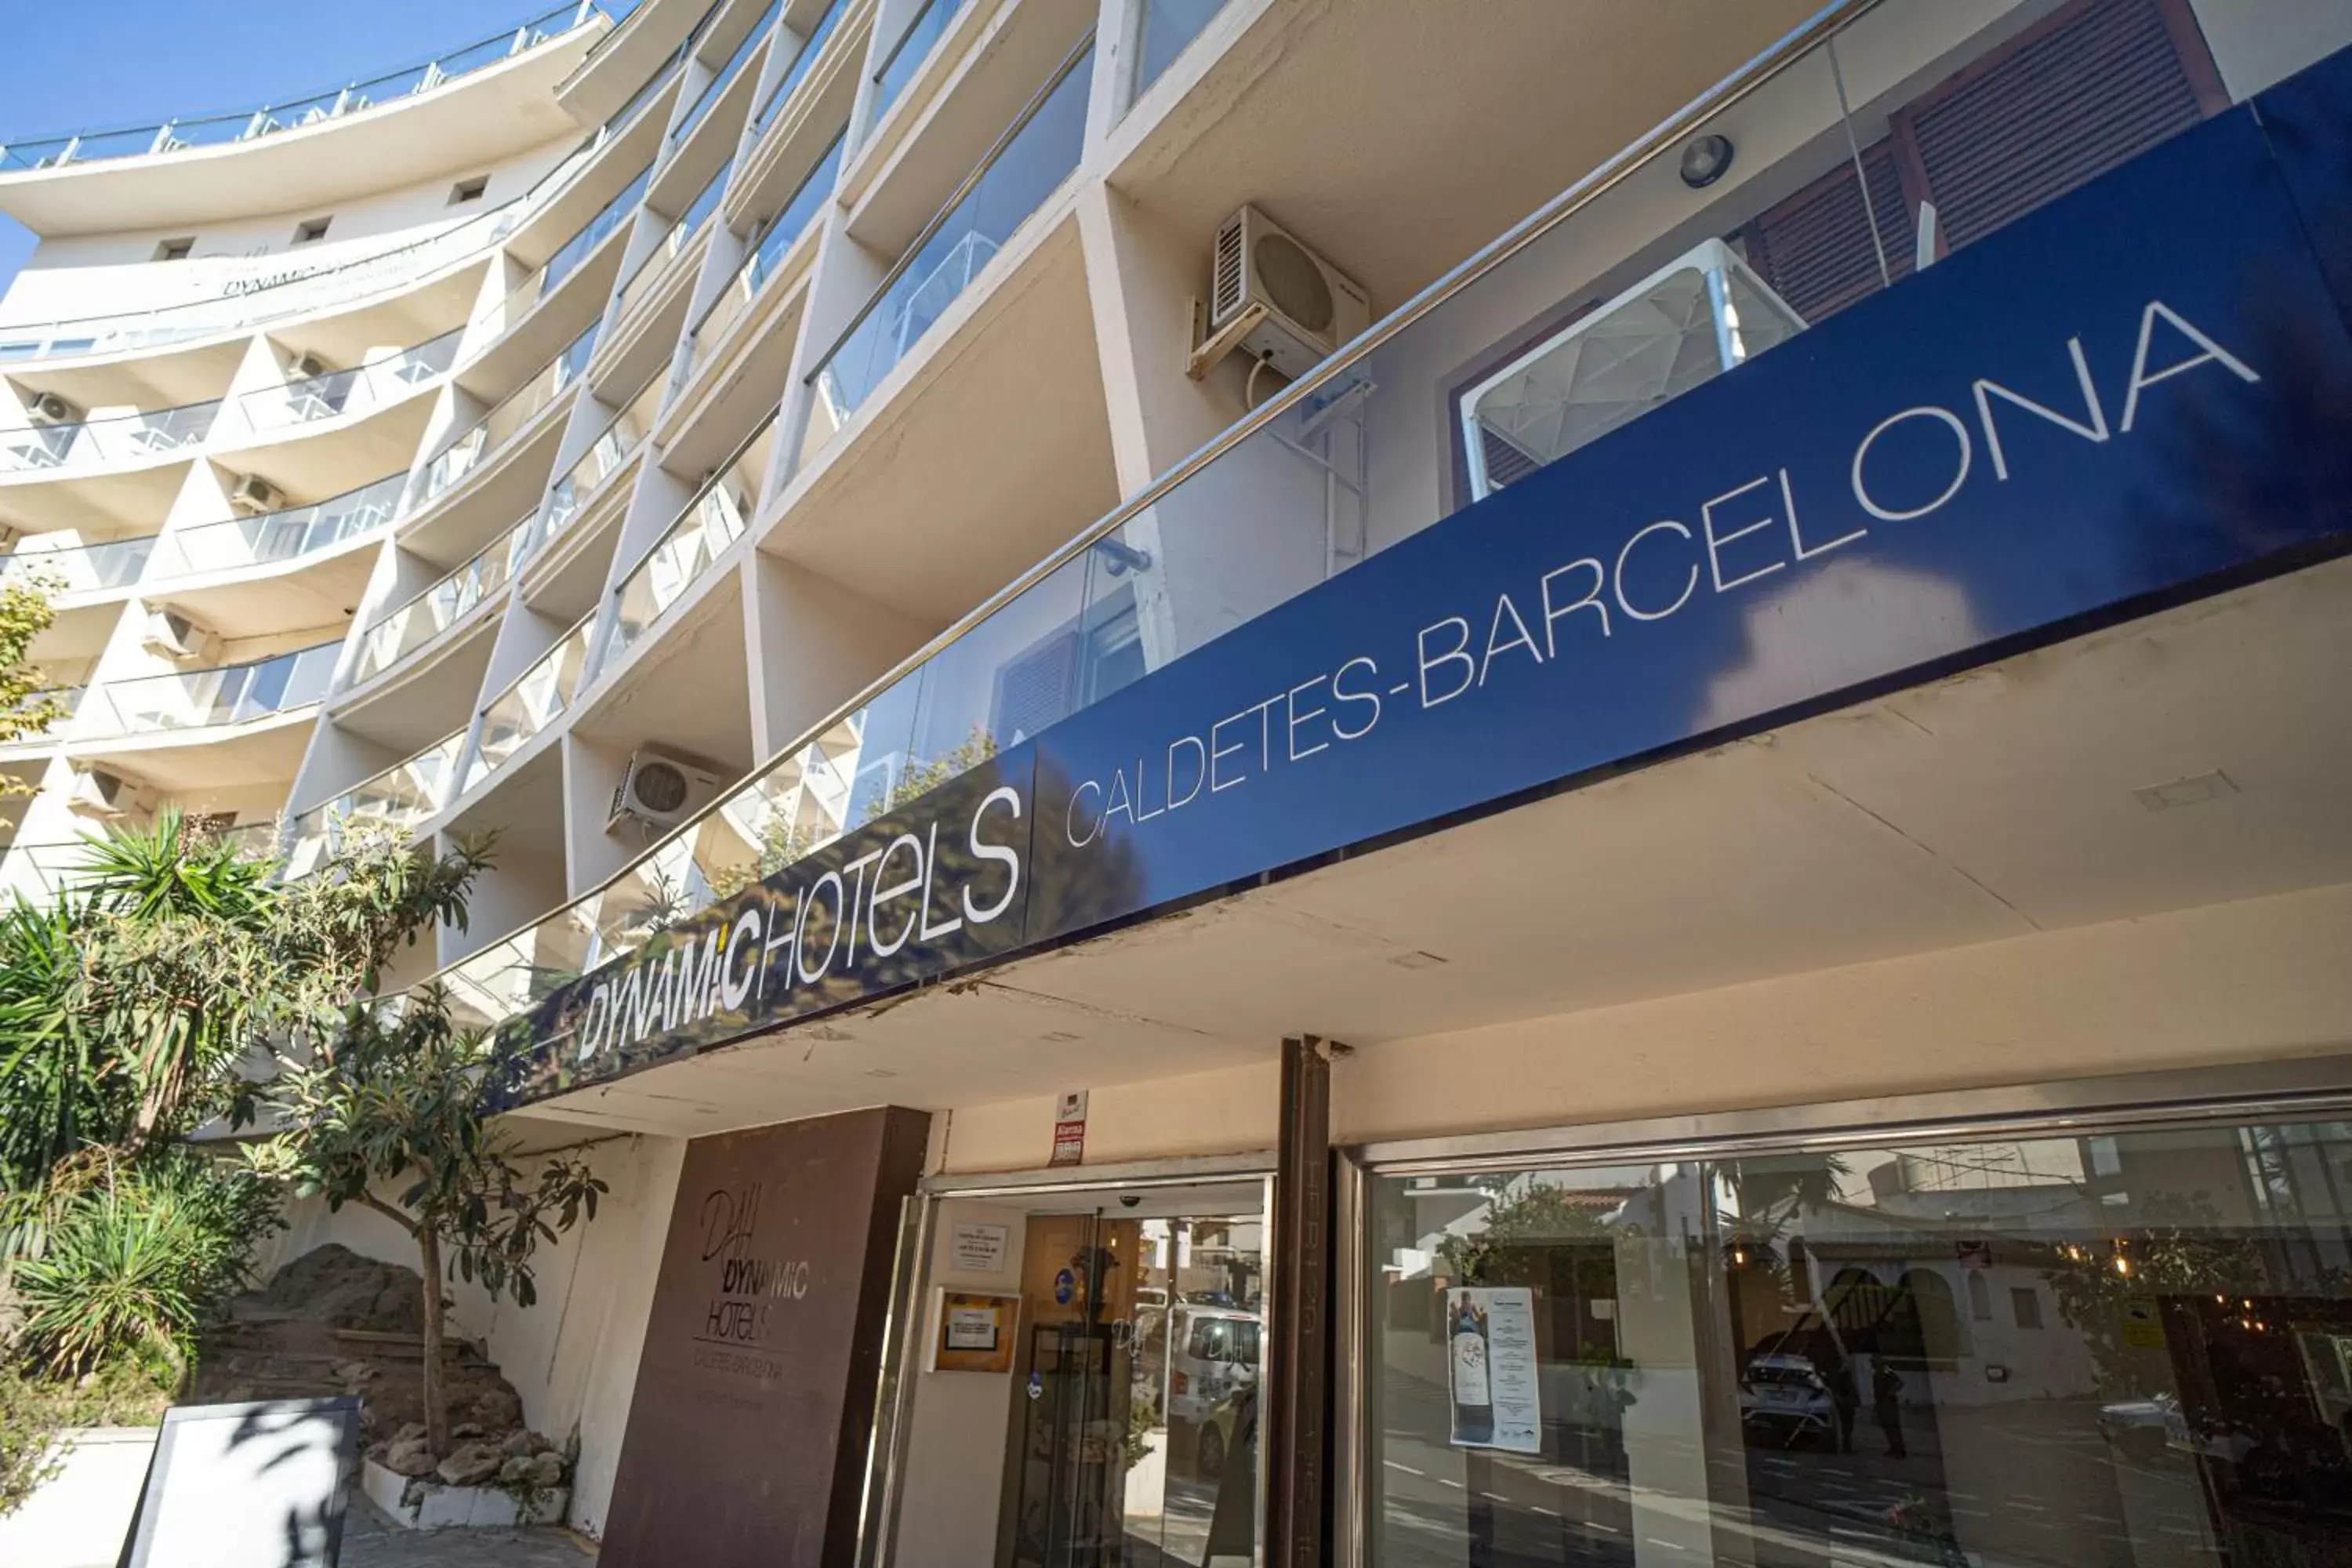 Property building in Dynamic Hotels Caldetes Barcelona